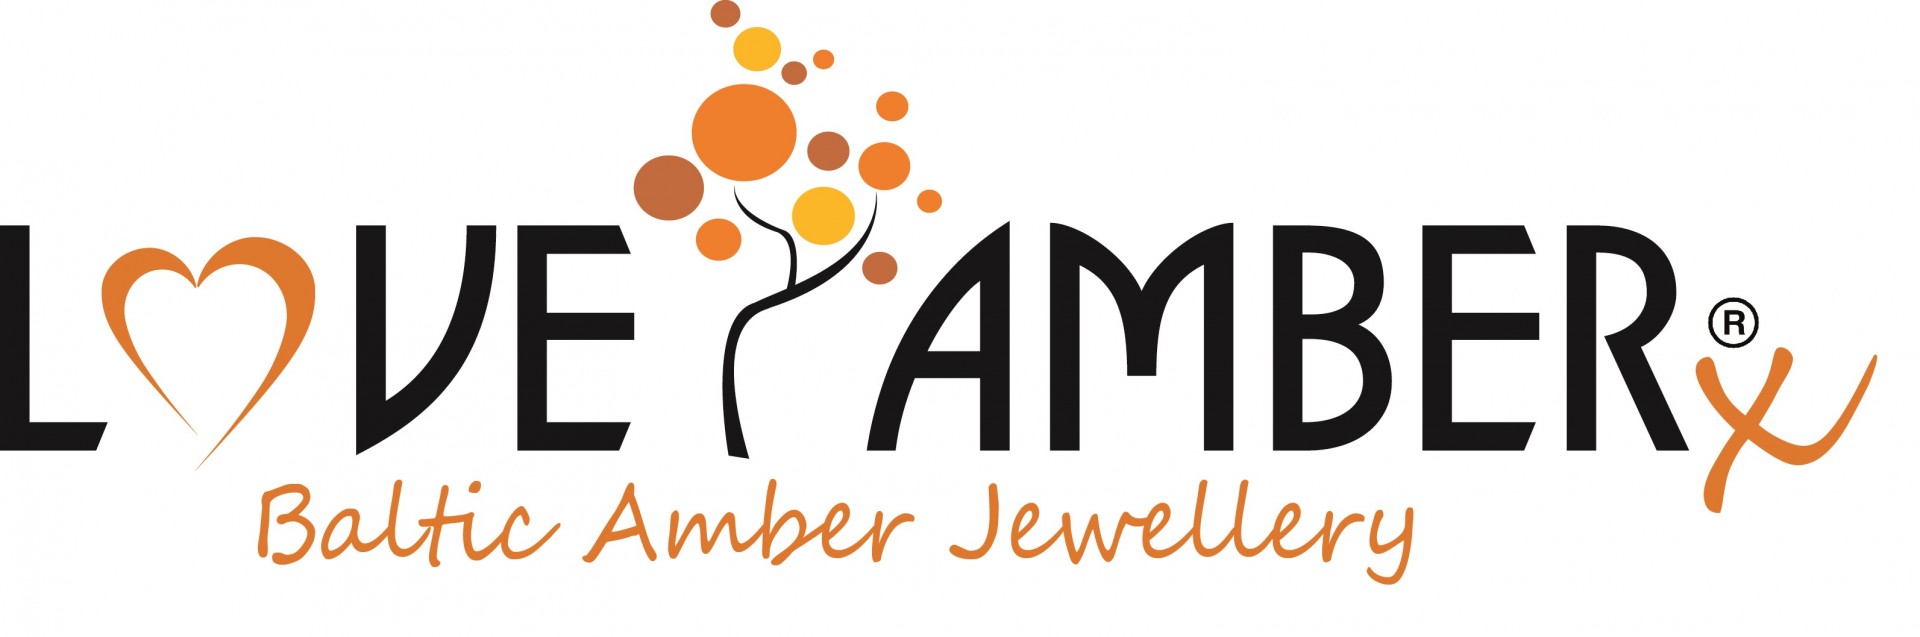 Love-Amber-x-Baltic-Amber-Jewellery